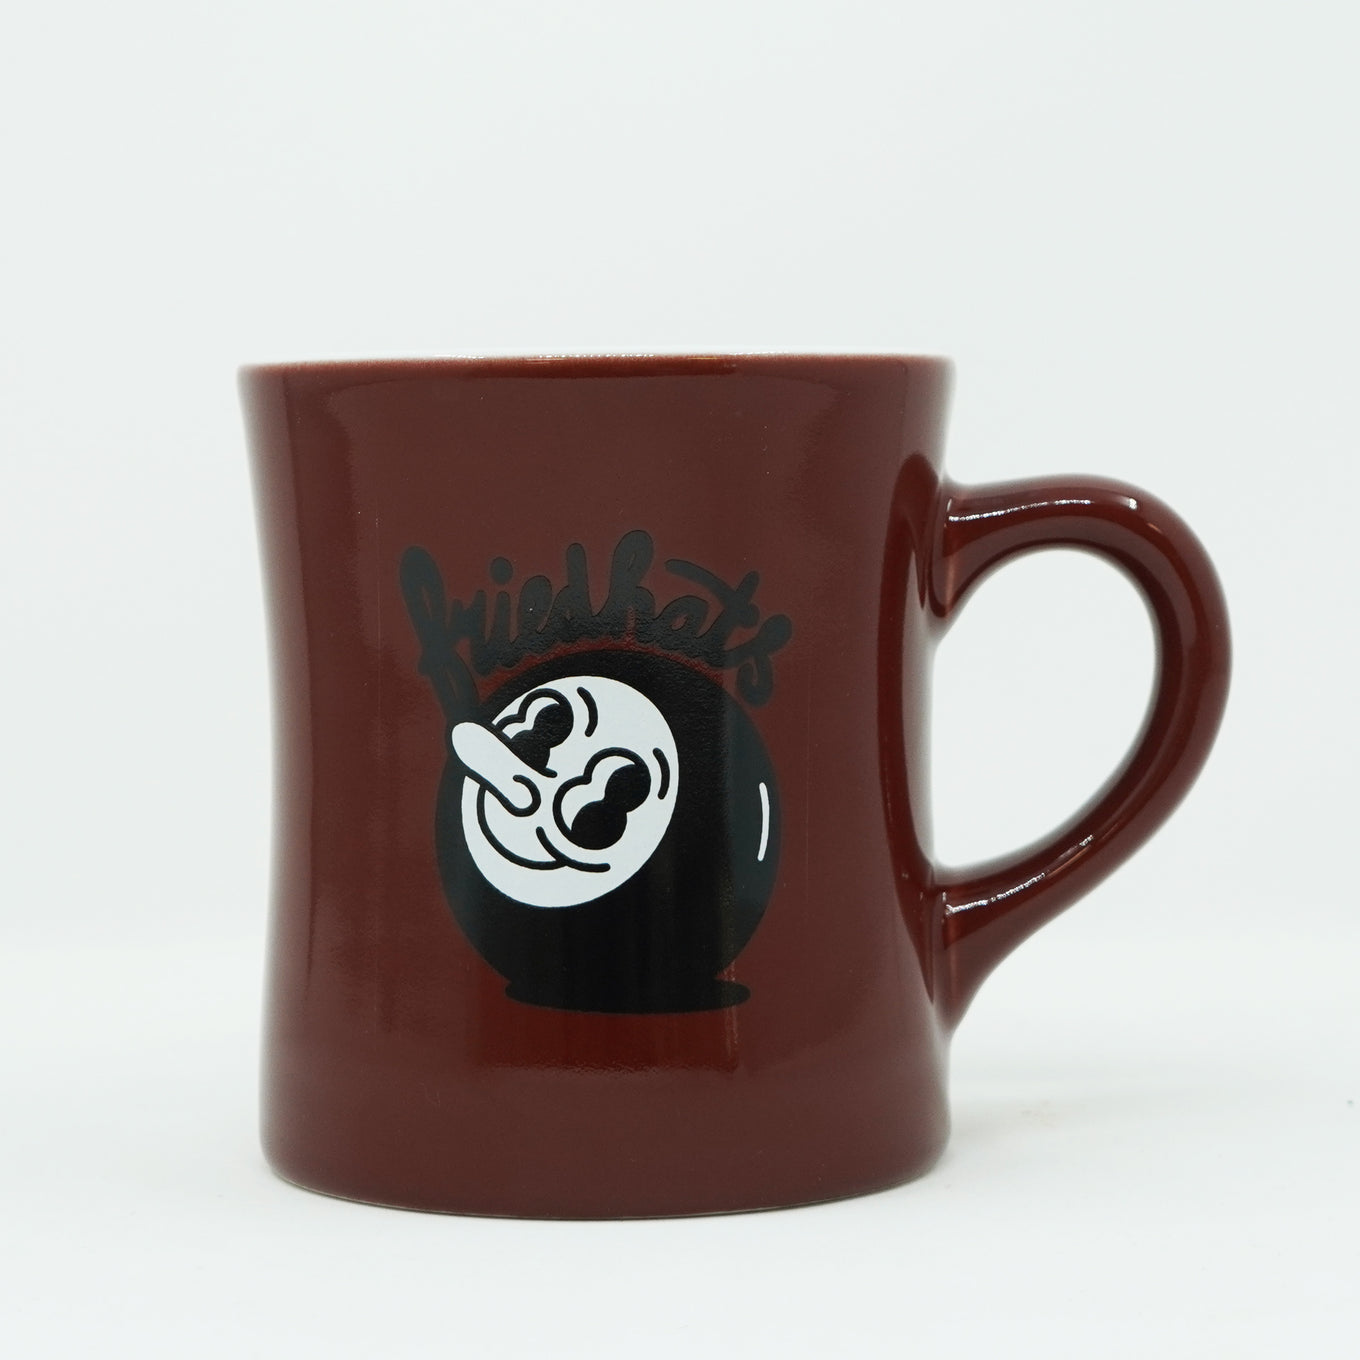 Friedhats Diner Mug (brown)